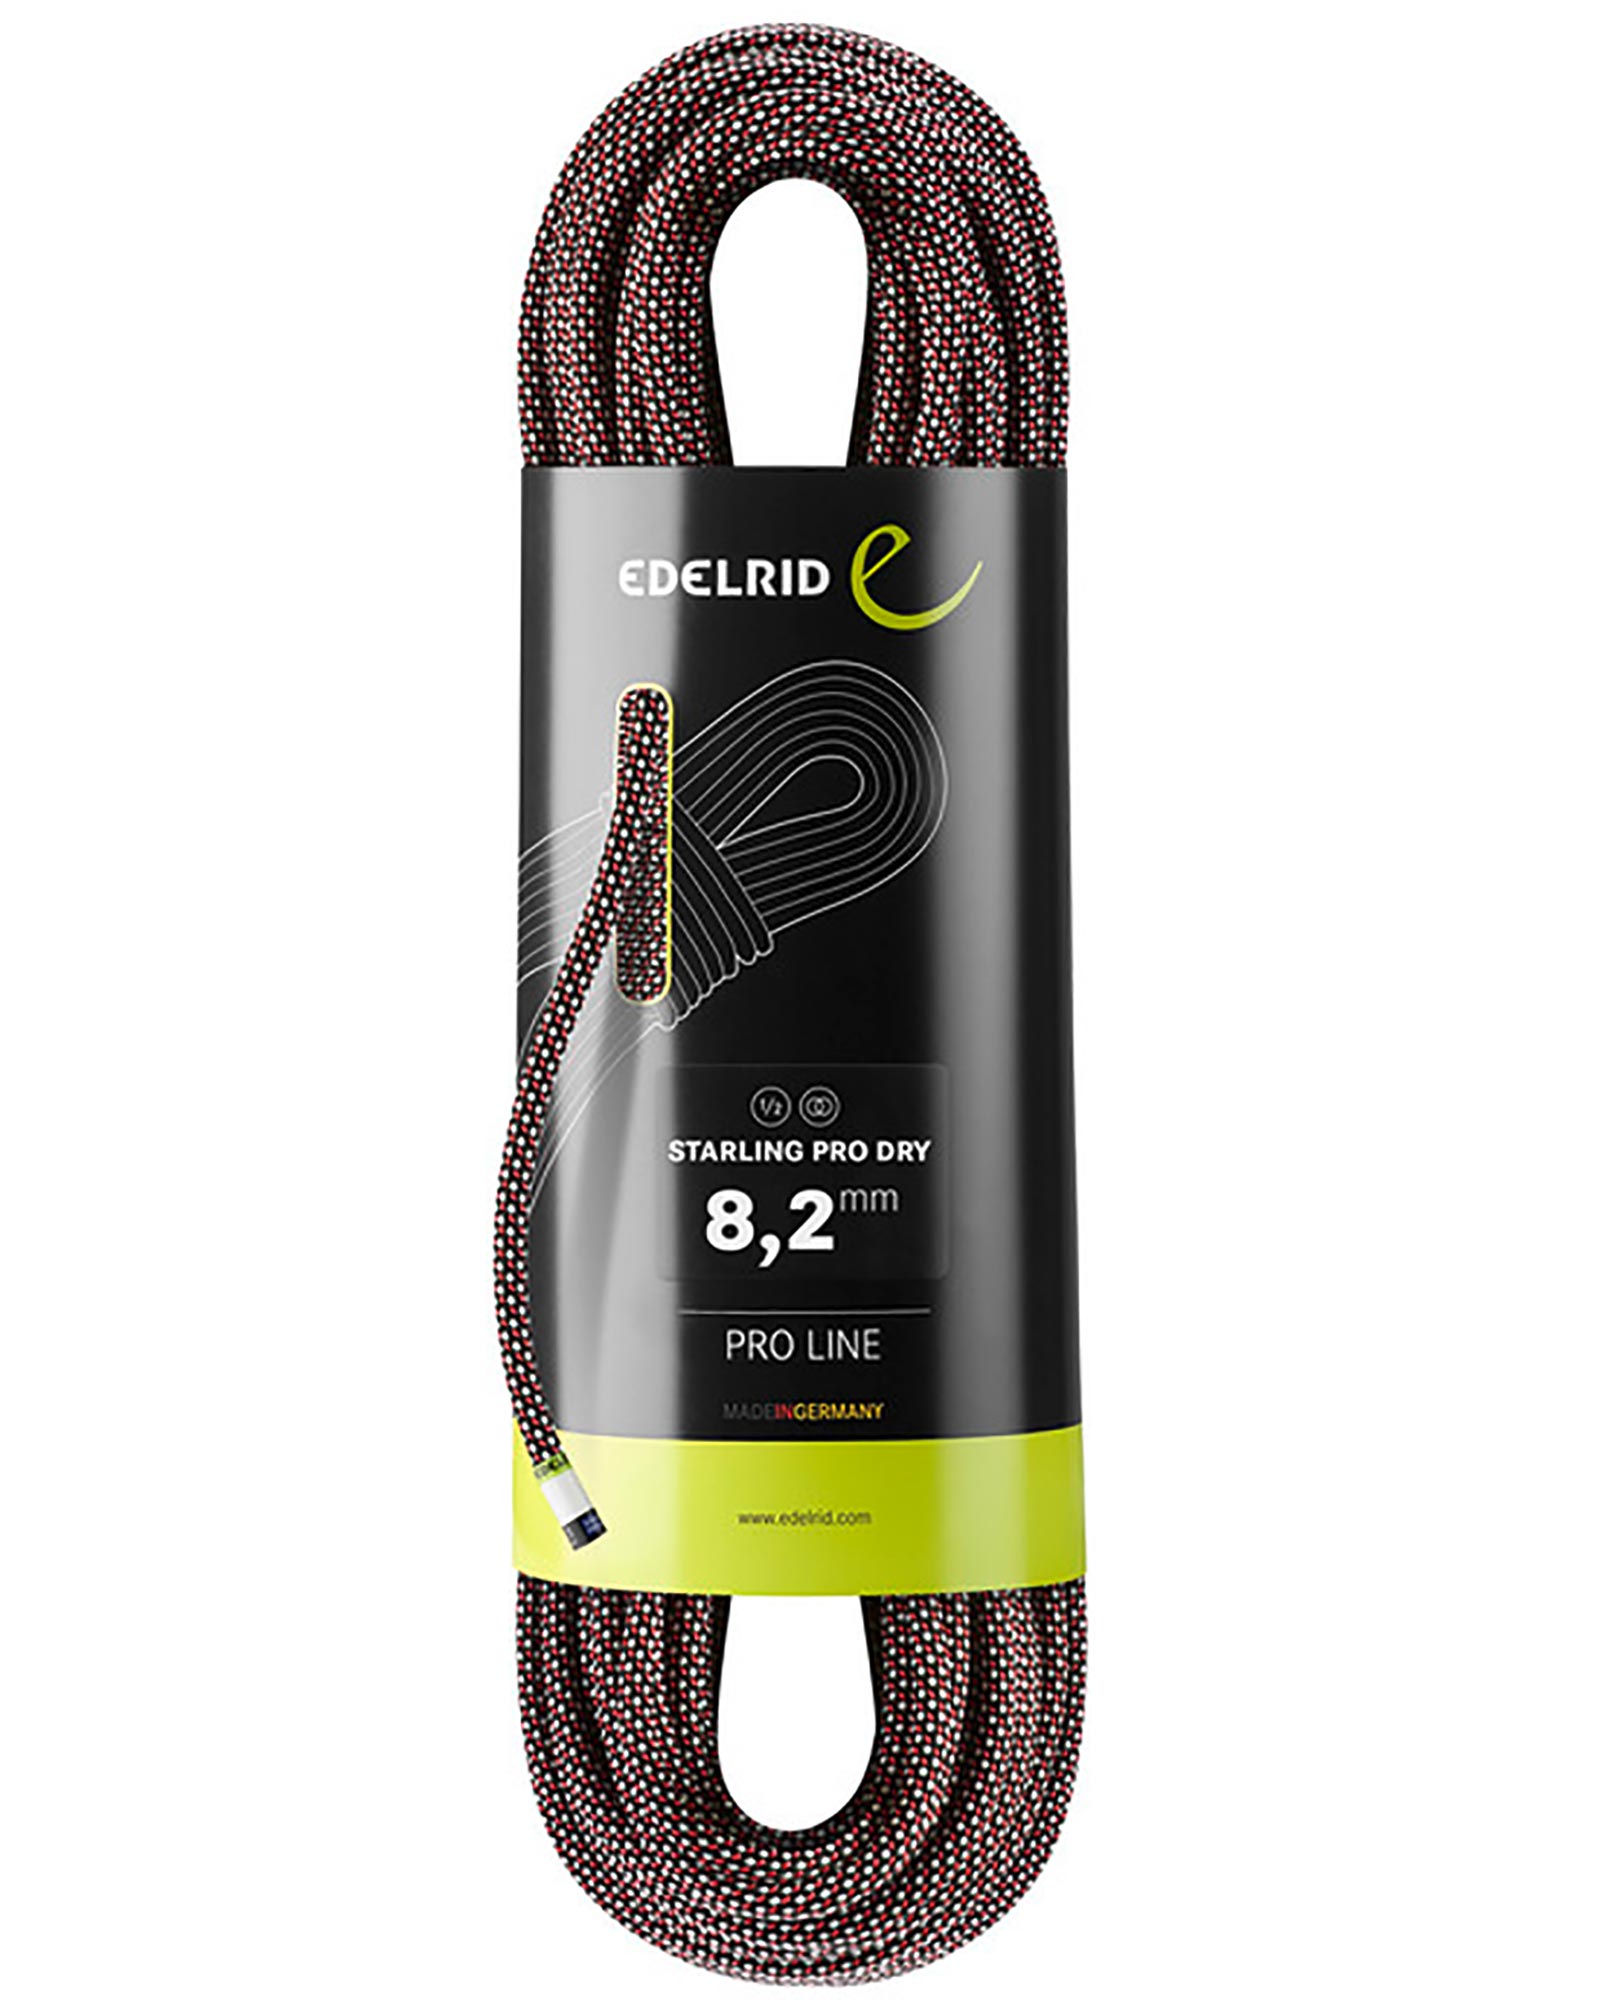 Edelrid Starling Pro Dry 8.2mm x 60m Rope - Night 60m